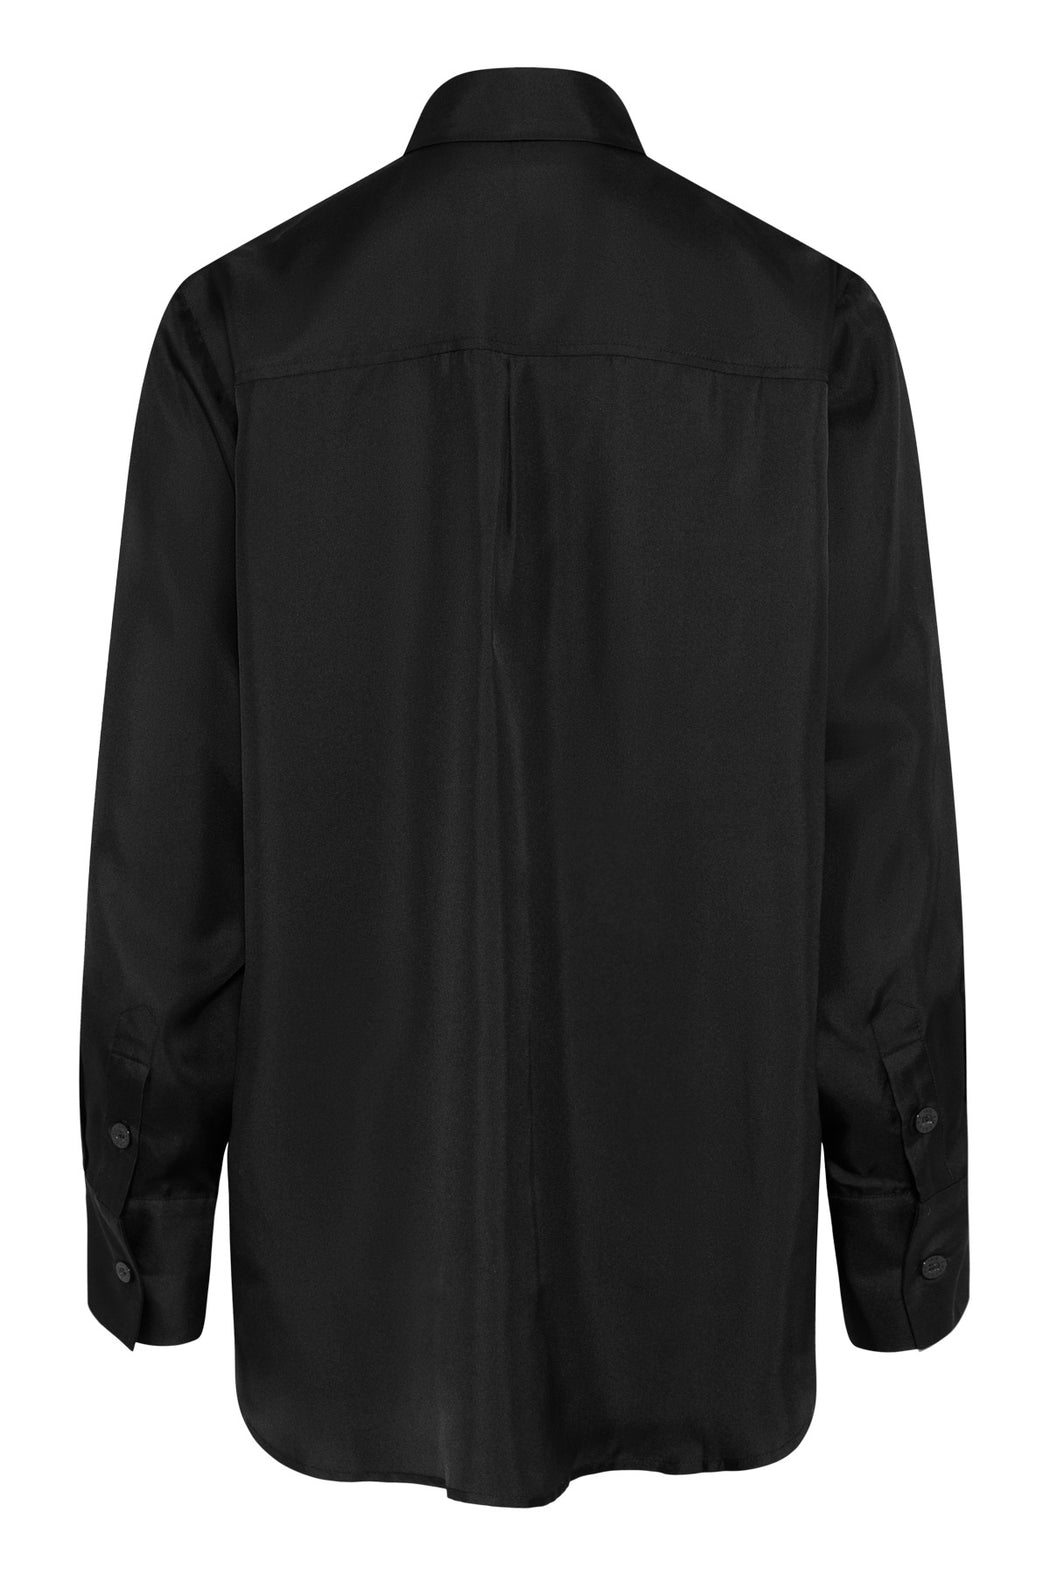 Envelope1976 Braga shirt - SIlk Shirt Black